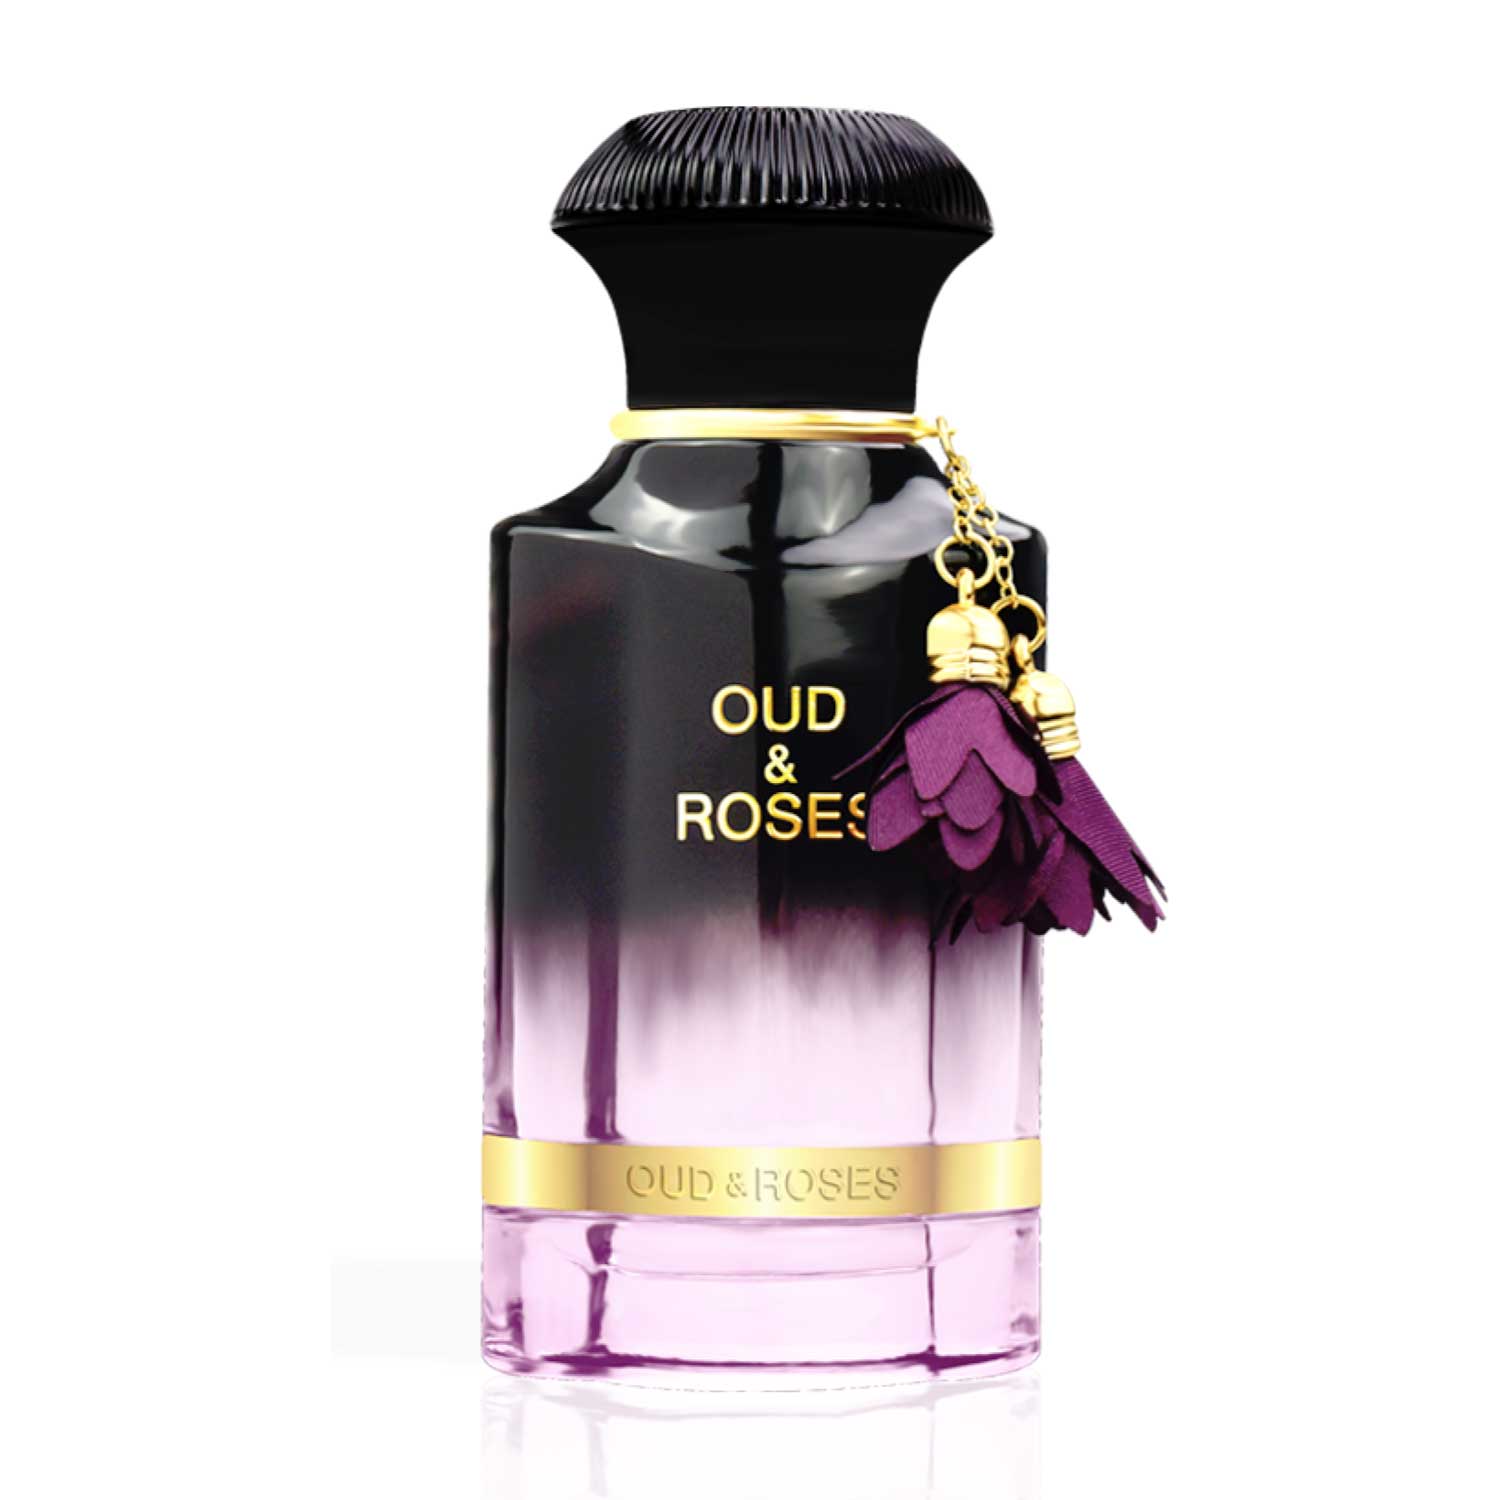  Arabian Rose by Amir Oud Fragrance, parfum spray for